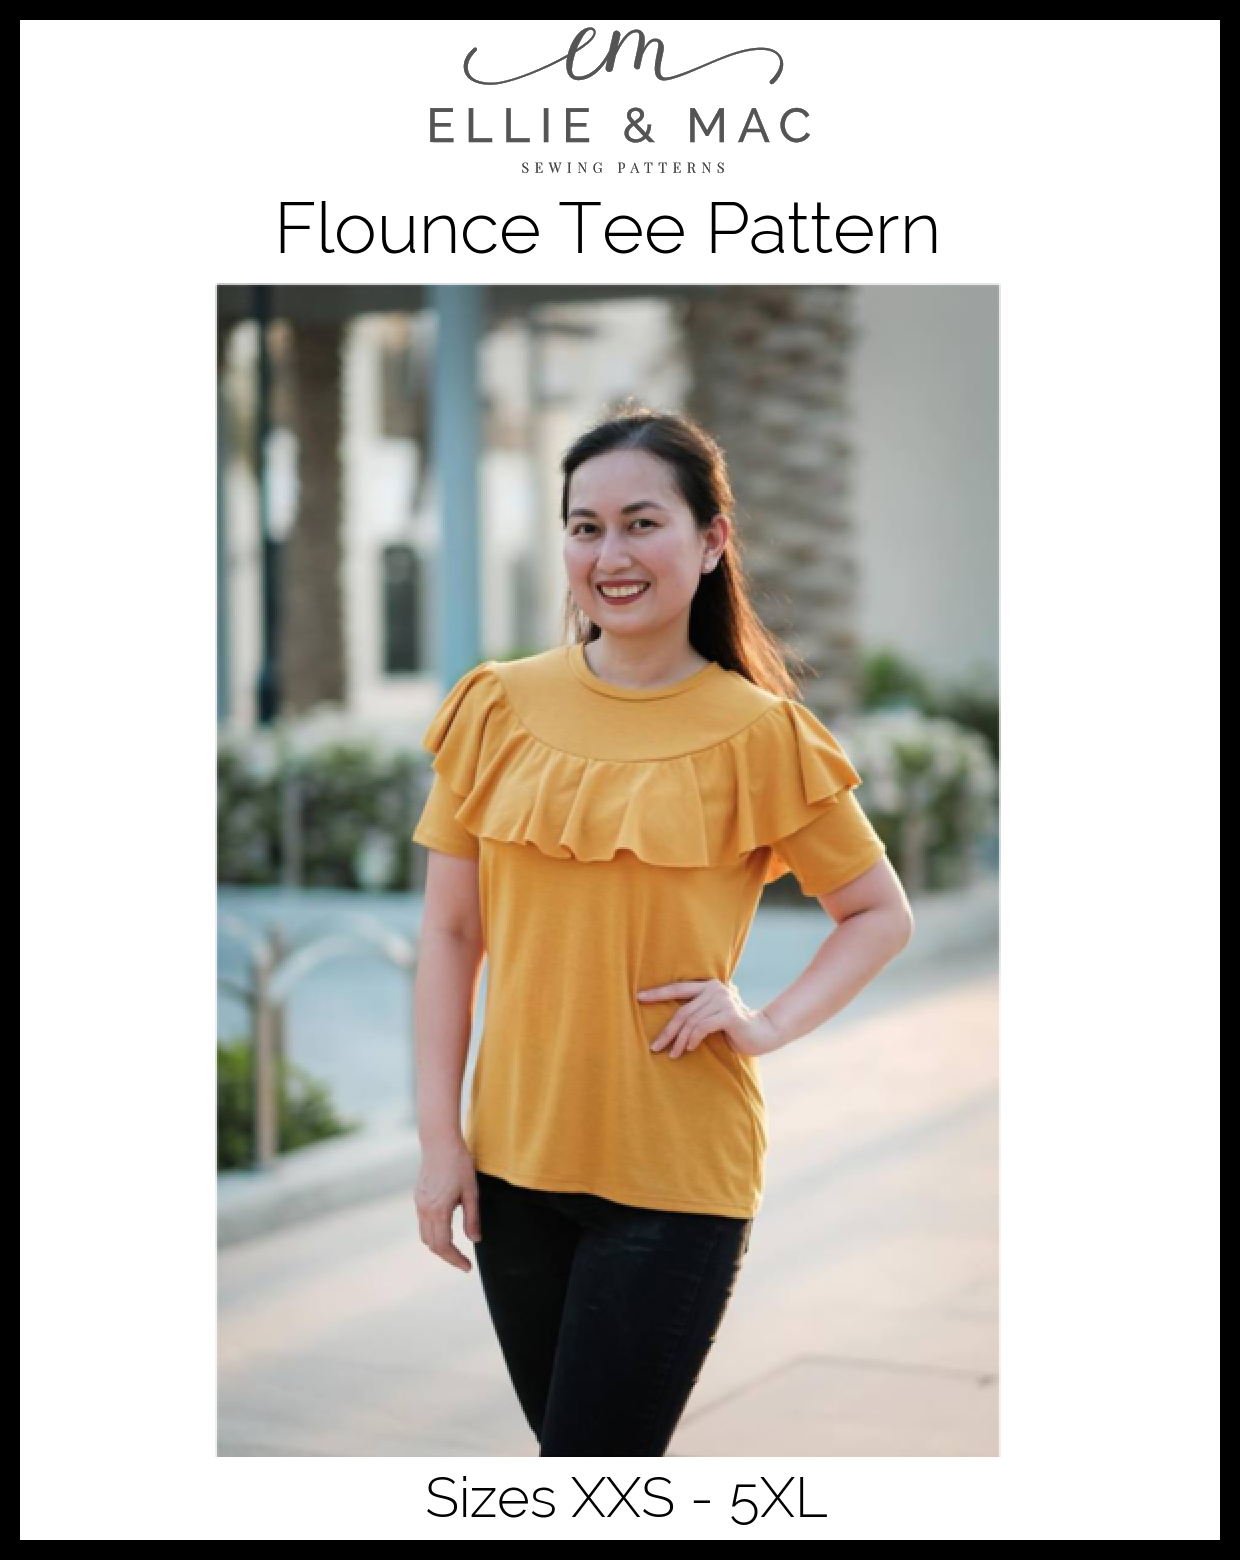 Flounce Tee Pattern